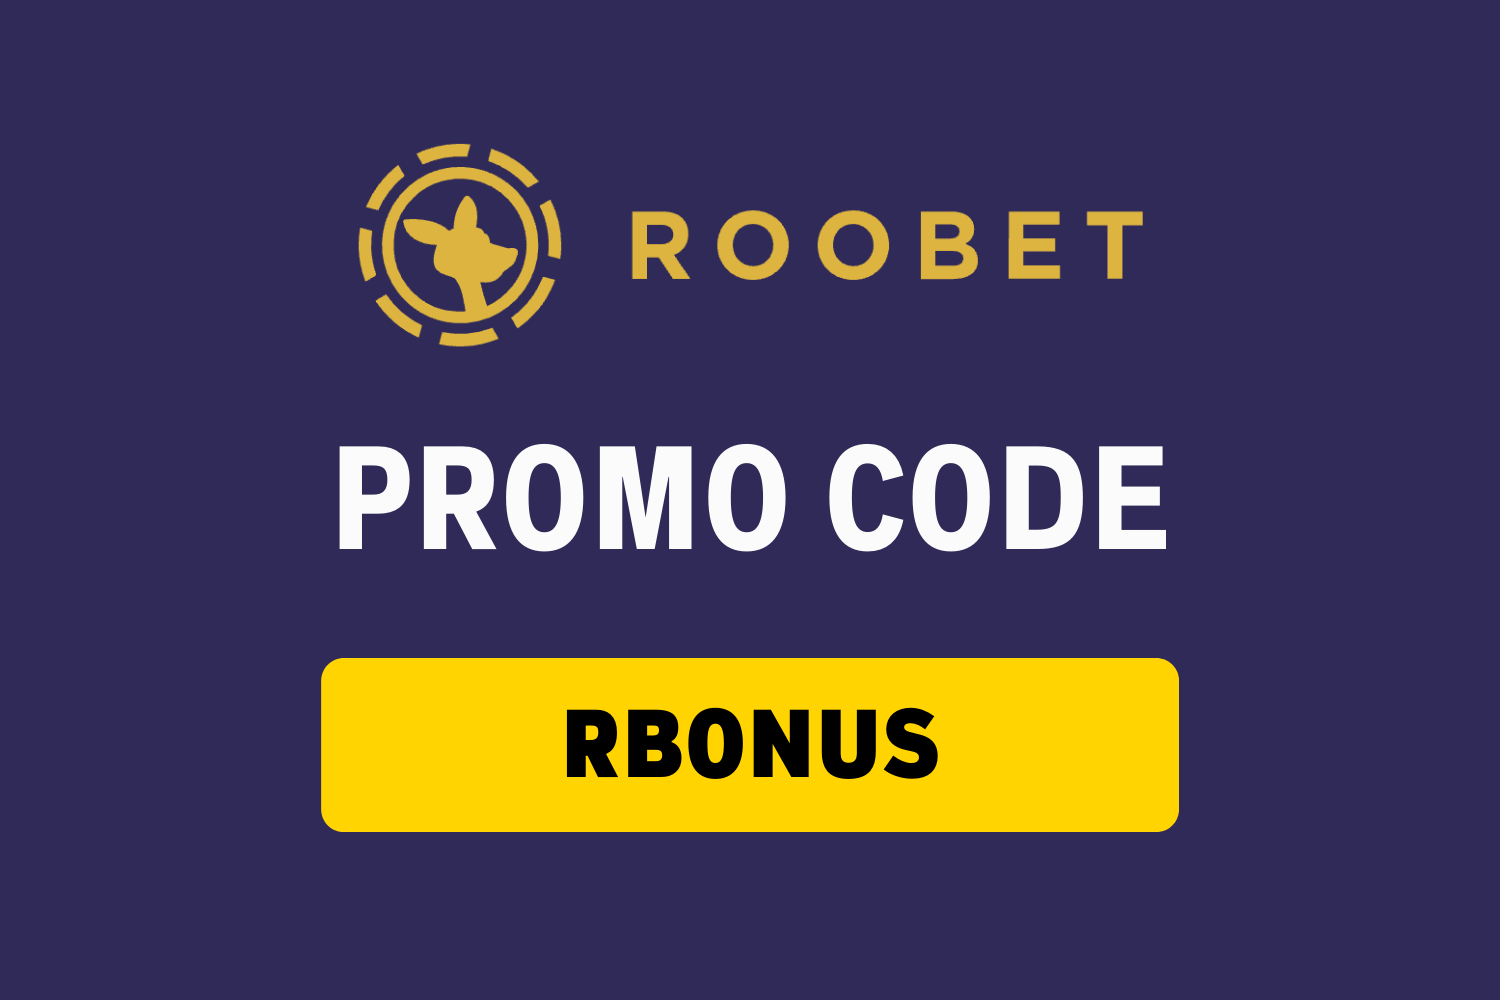 Roobet Promo Code: Get 100% Bonus on First Deposit - wide 6